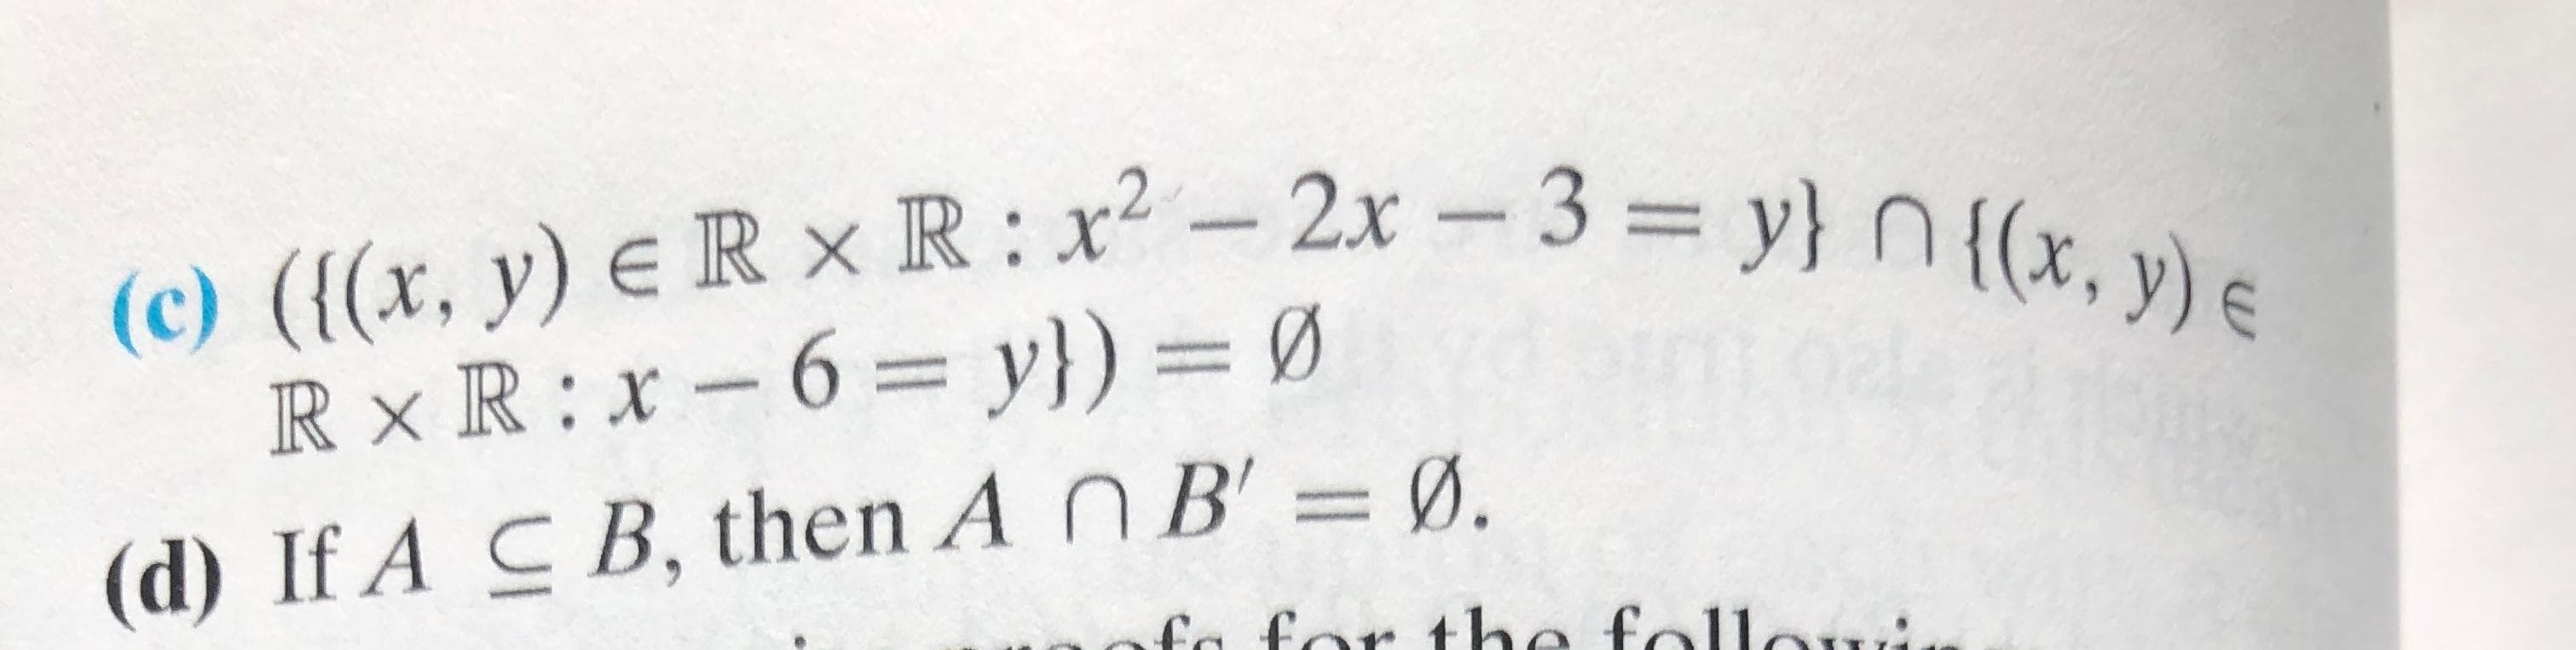 (c) (1(x, y) e R xR : -2x-3 y} n((x, y)e
6
y}) = 0
R x R: x
(d) If A C B, then A n B' =0.
for the follor.
